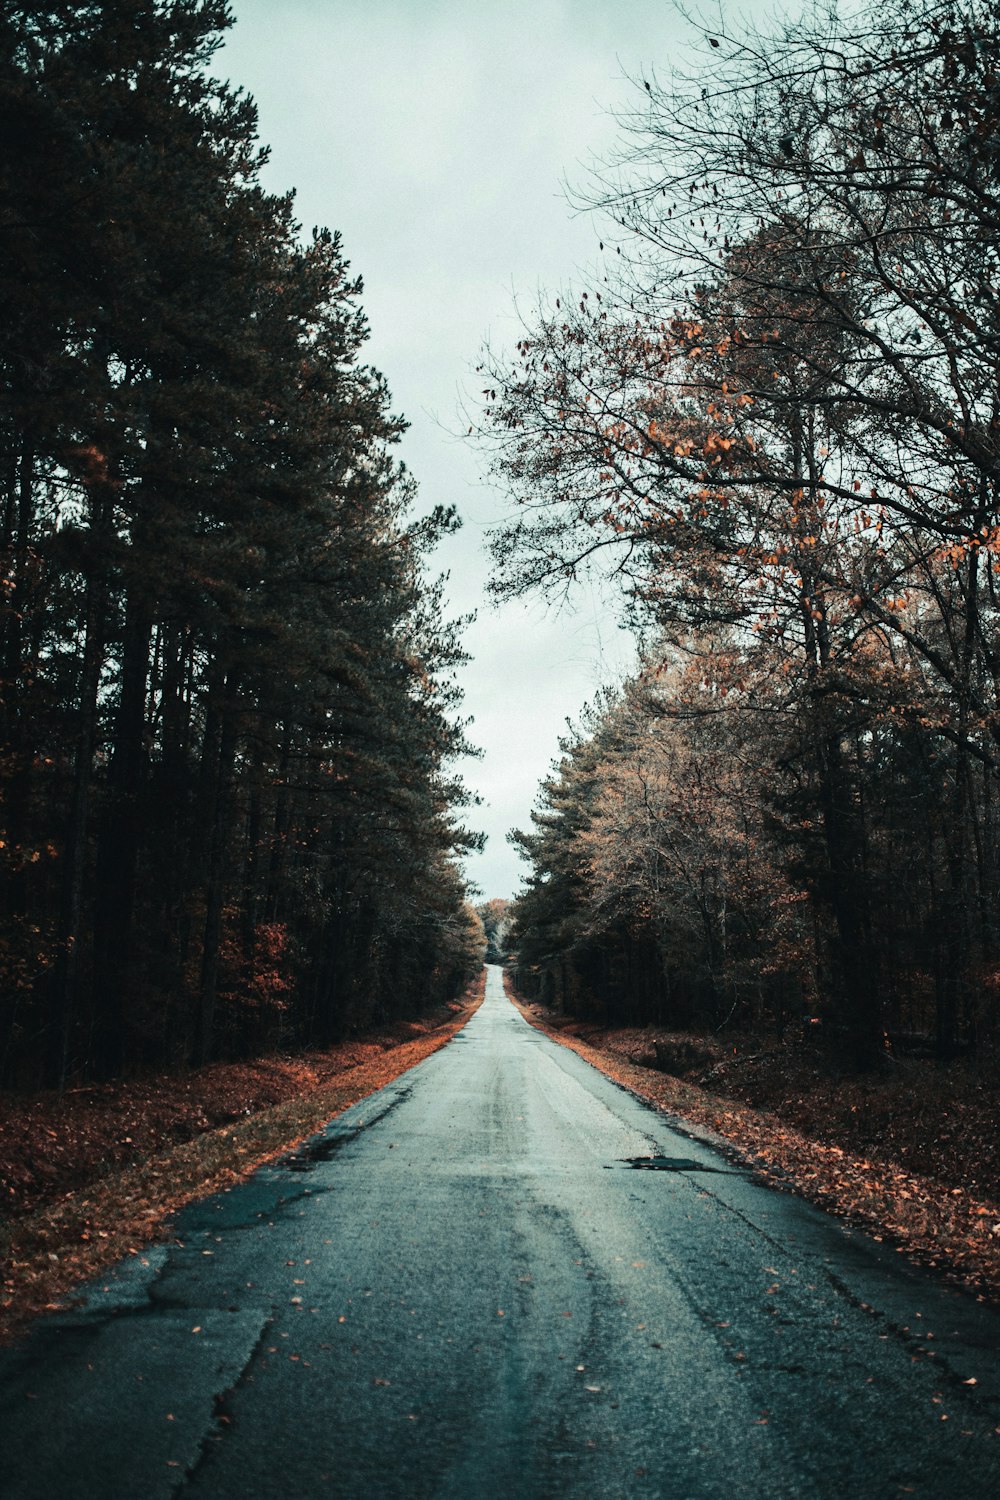 strada vuota tra gli alberi